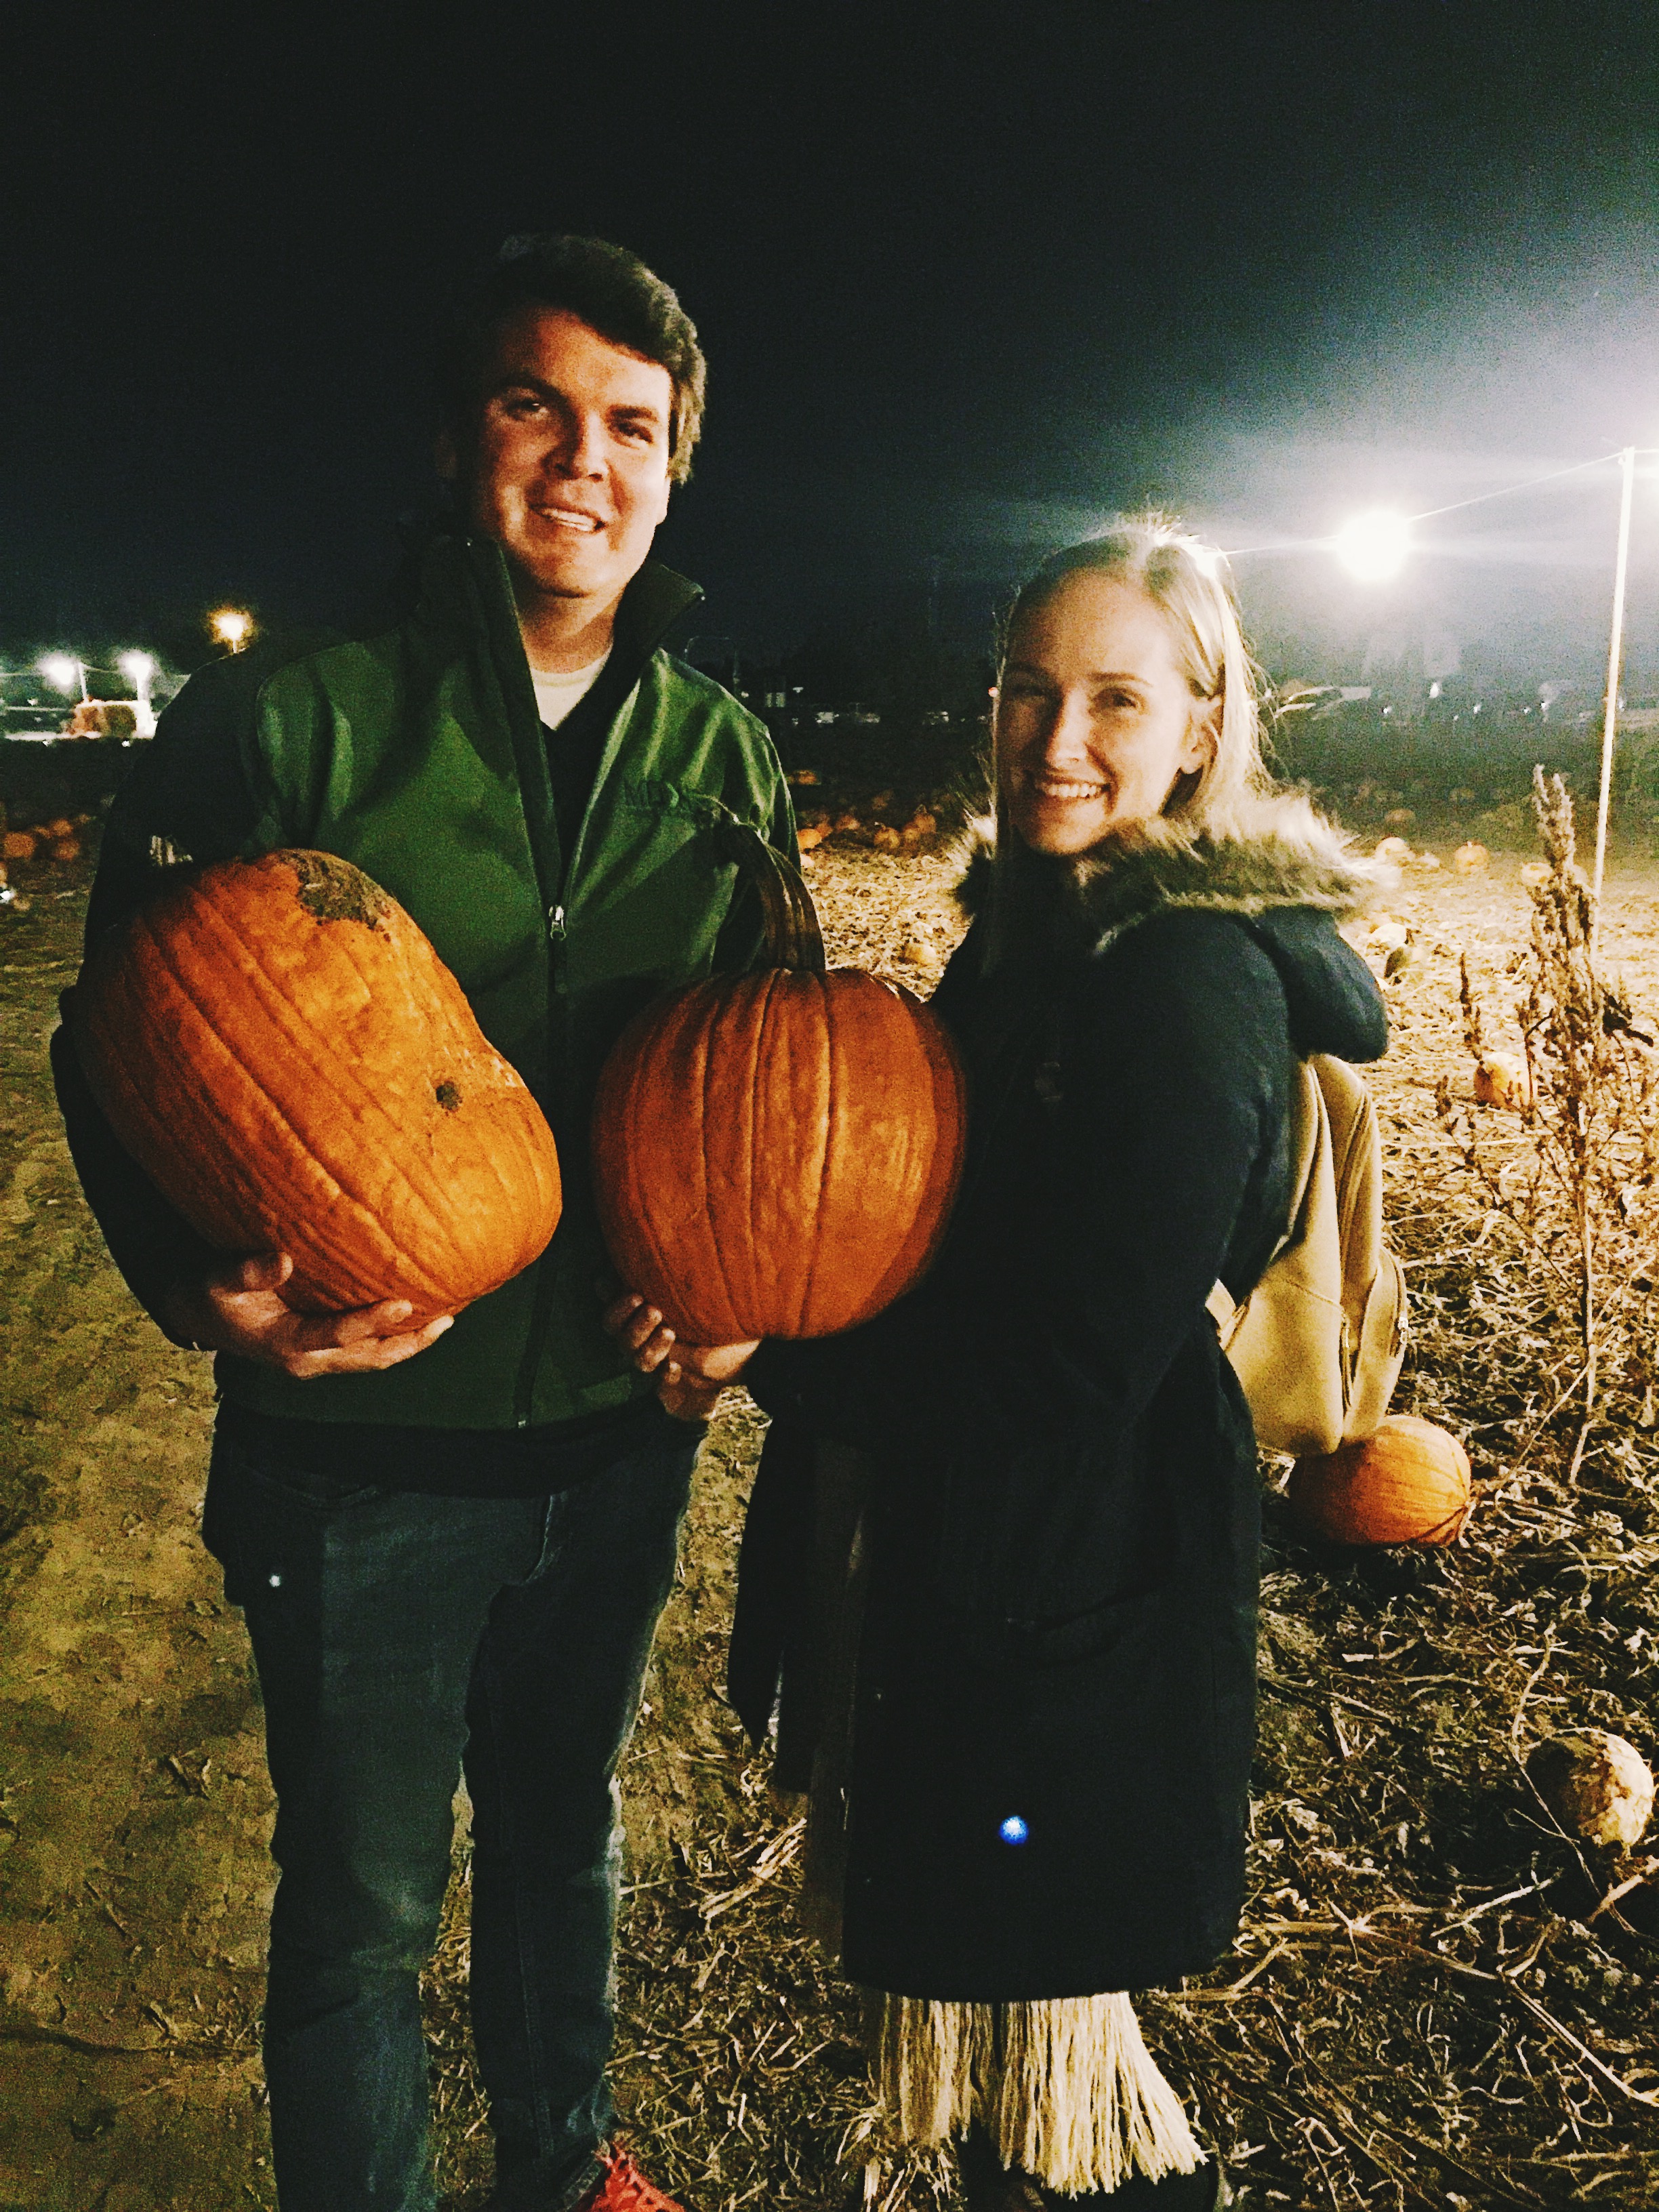 picked pumpkins with Noelle & Kelly...